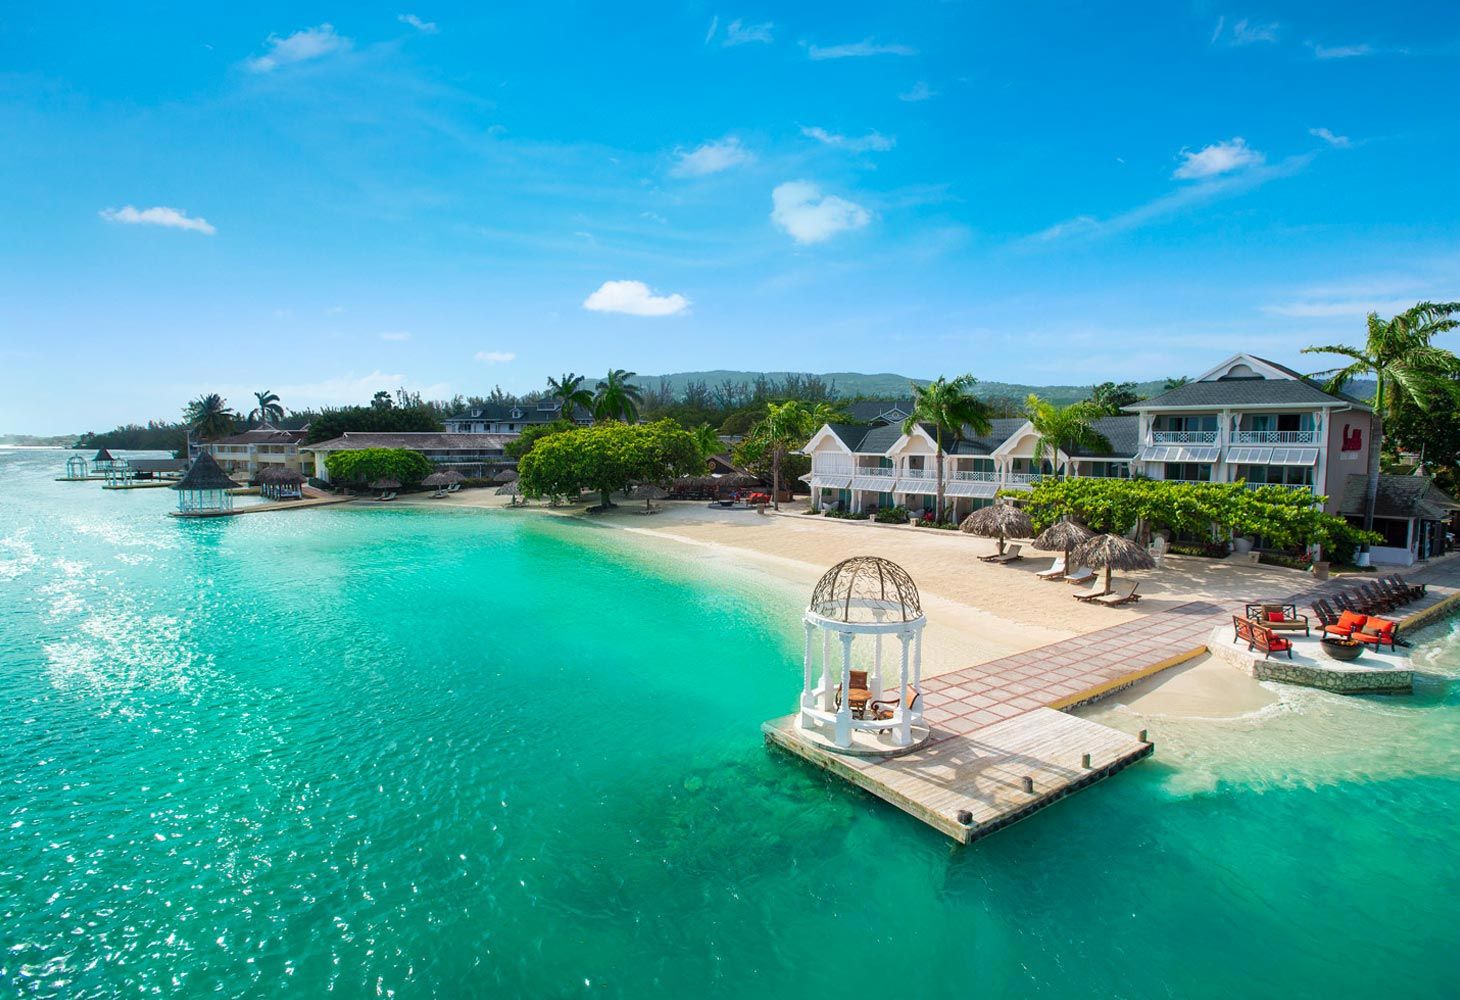 Sandals Royal Caribbean all-inclusive resort